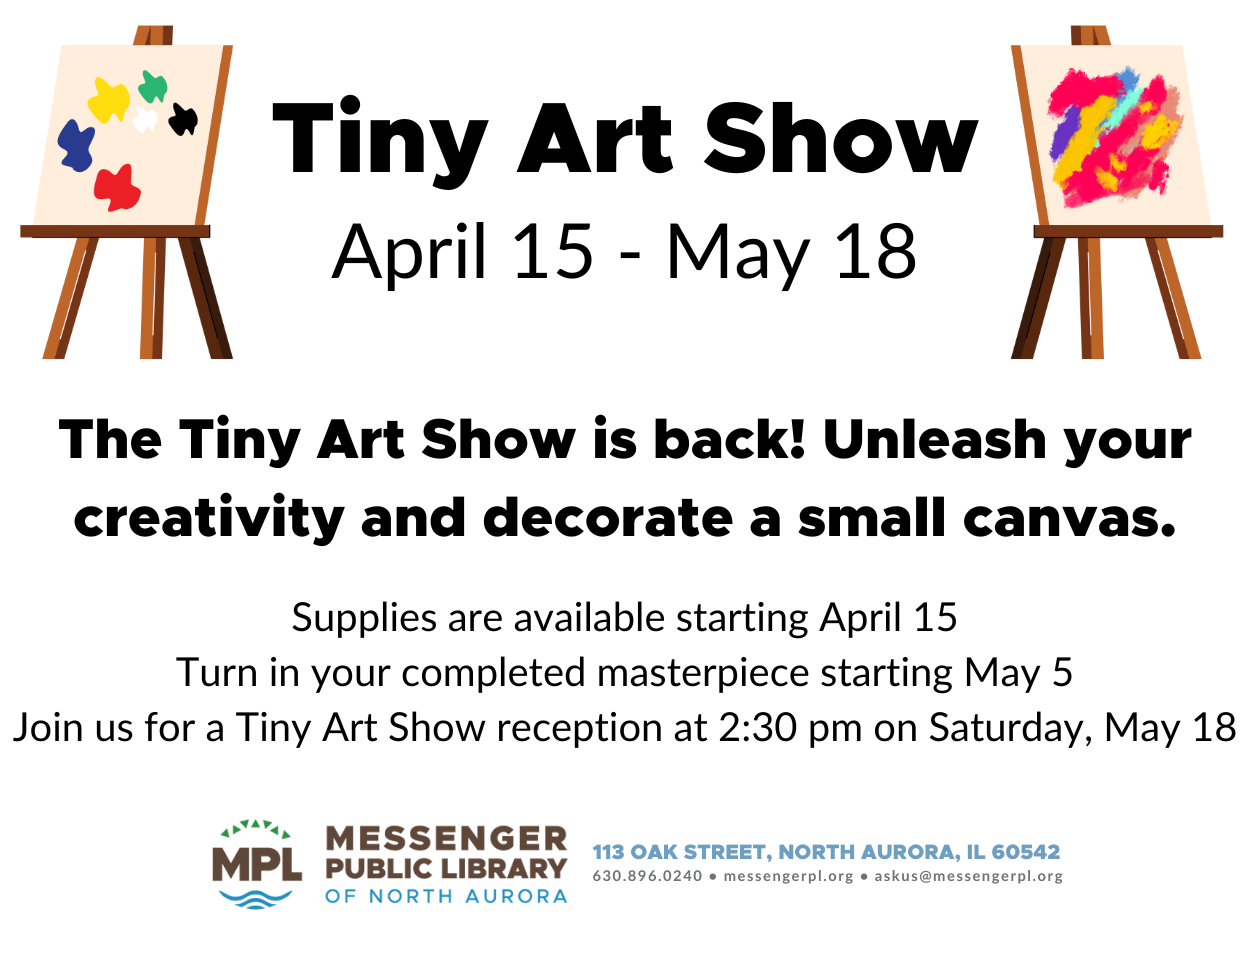 Tiny Art Show Supply pick up starts April 15